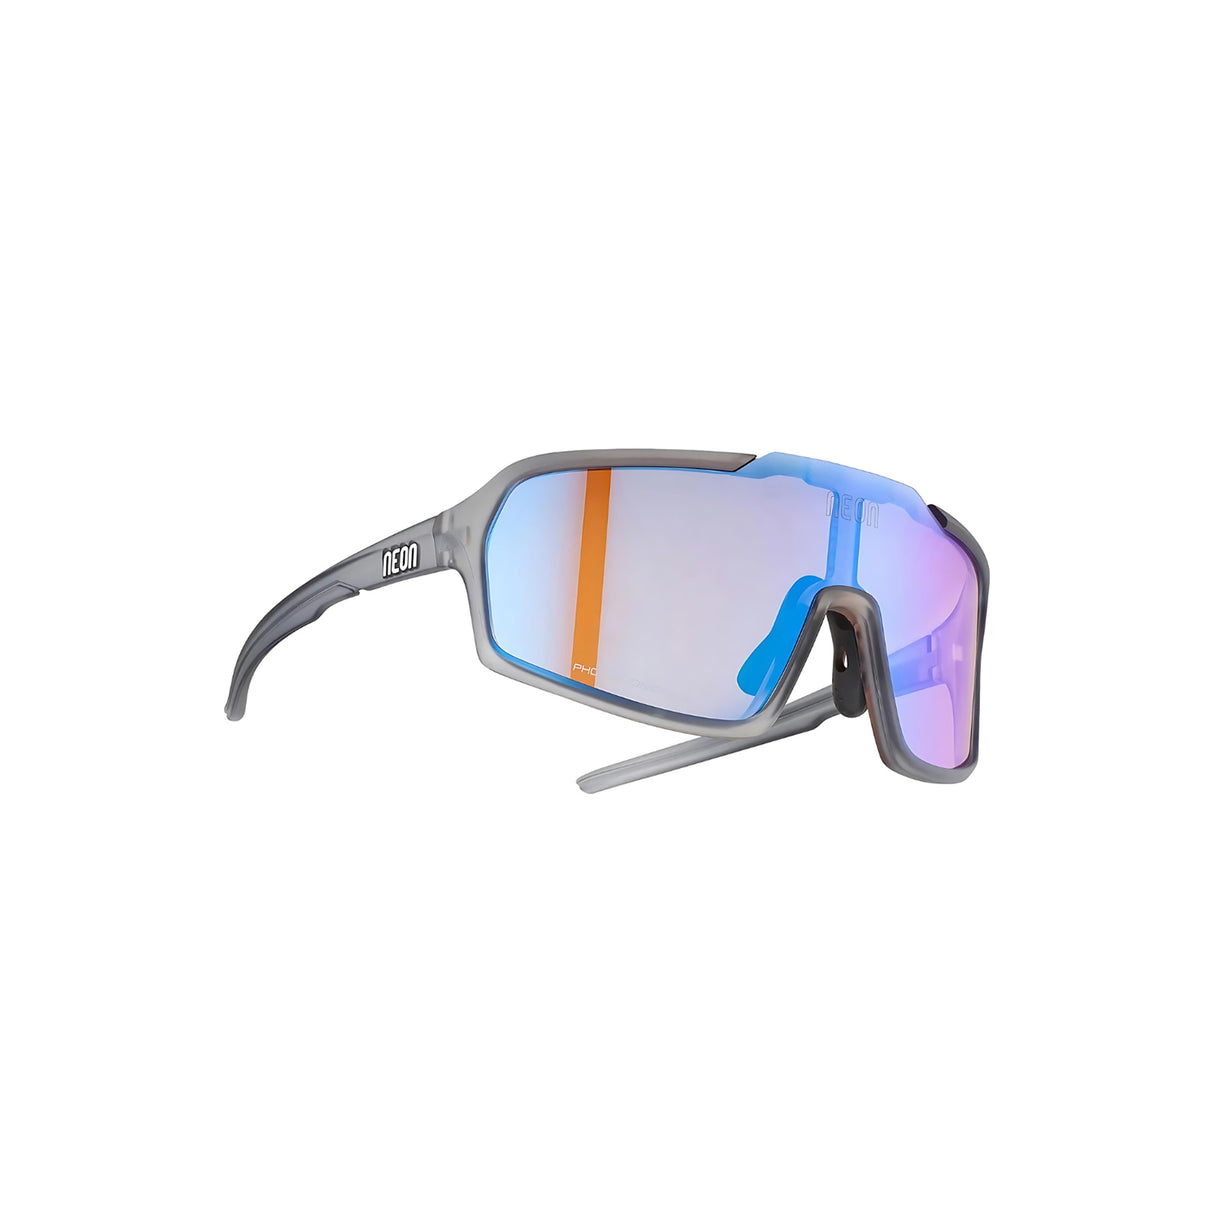 Neon Sunglasses Arizona 2.0 - Mirrortronic